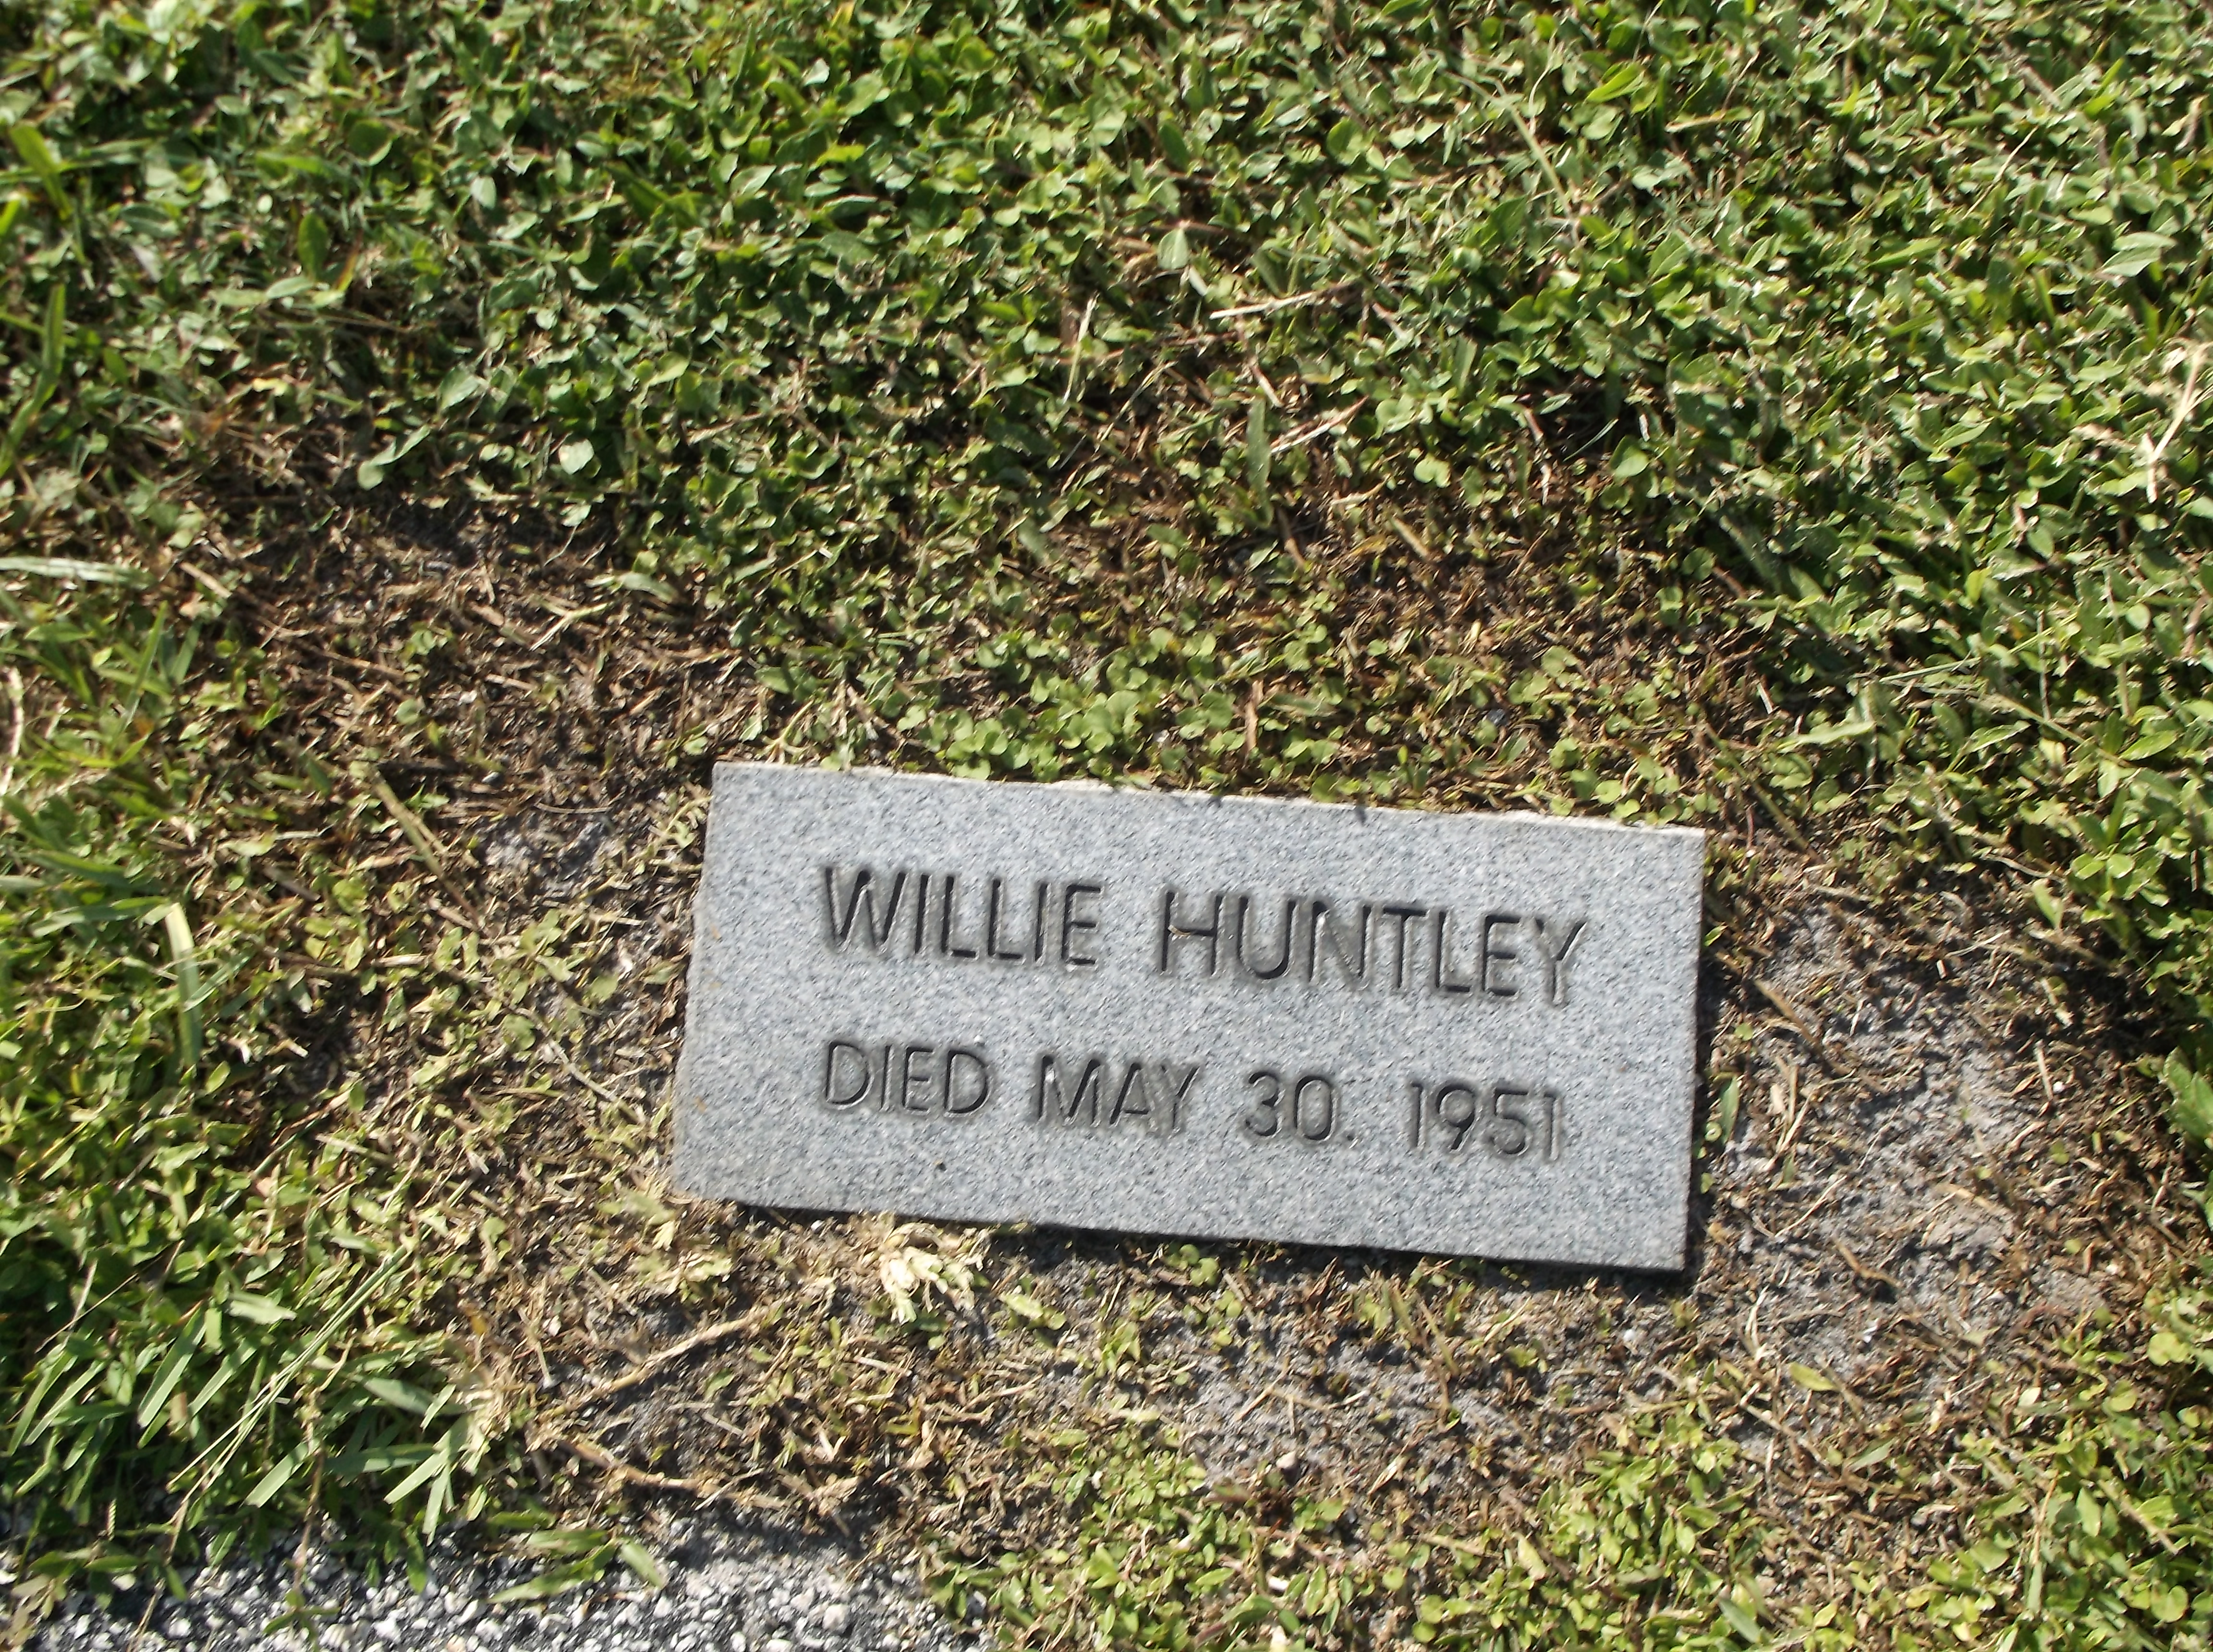 Willie Huntley